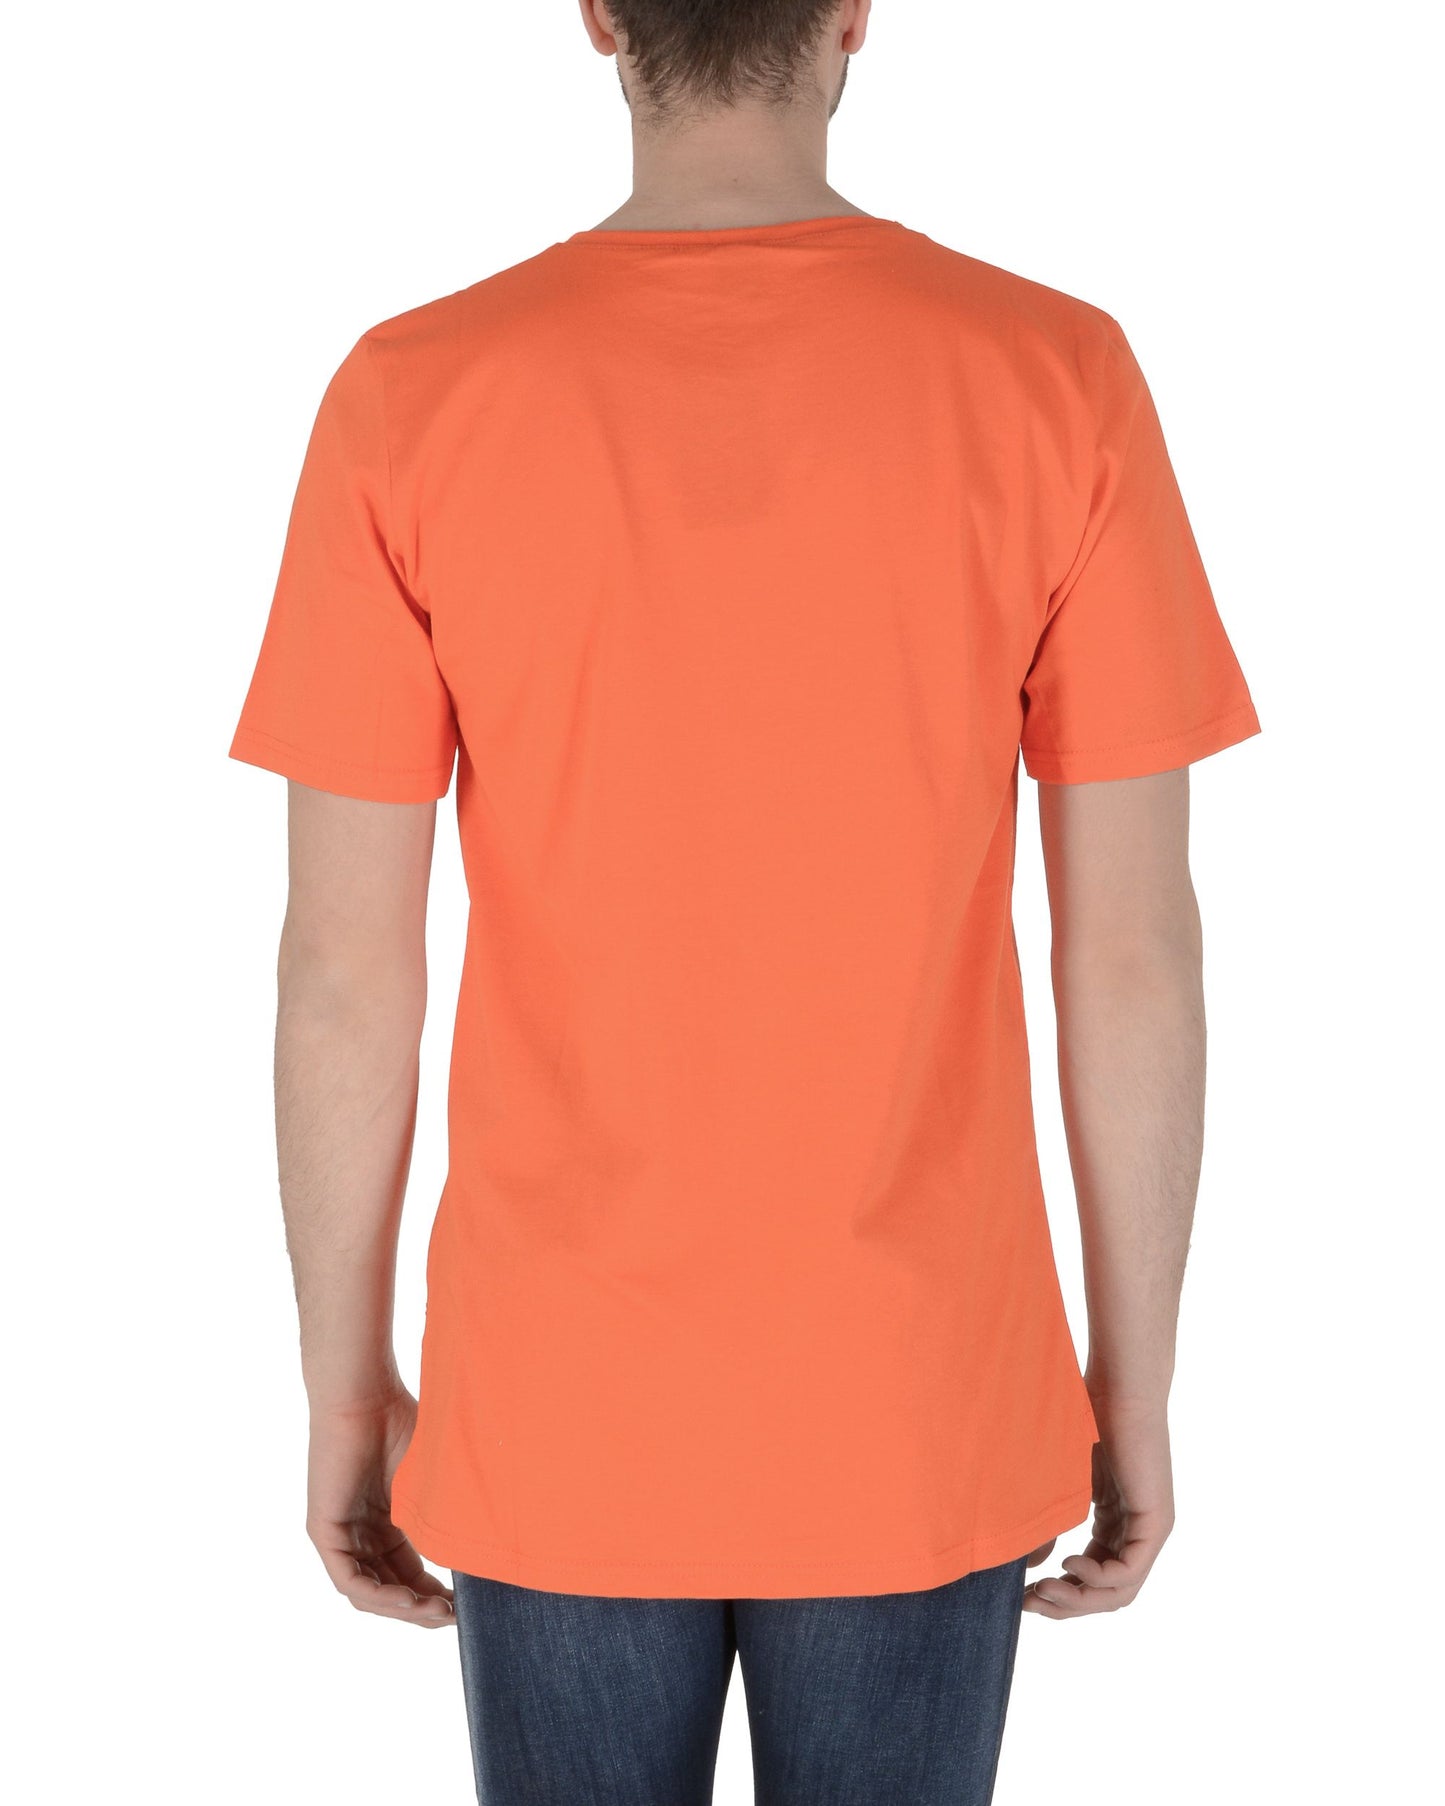 19V69 Italia T-Shirt Uomo Arancione PISTIKO ARANCIONE